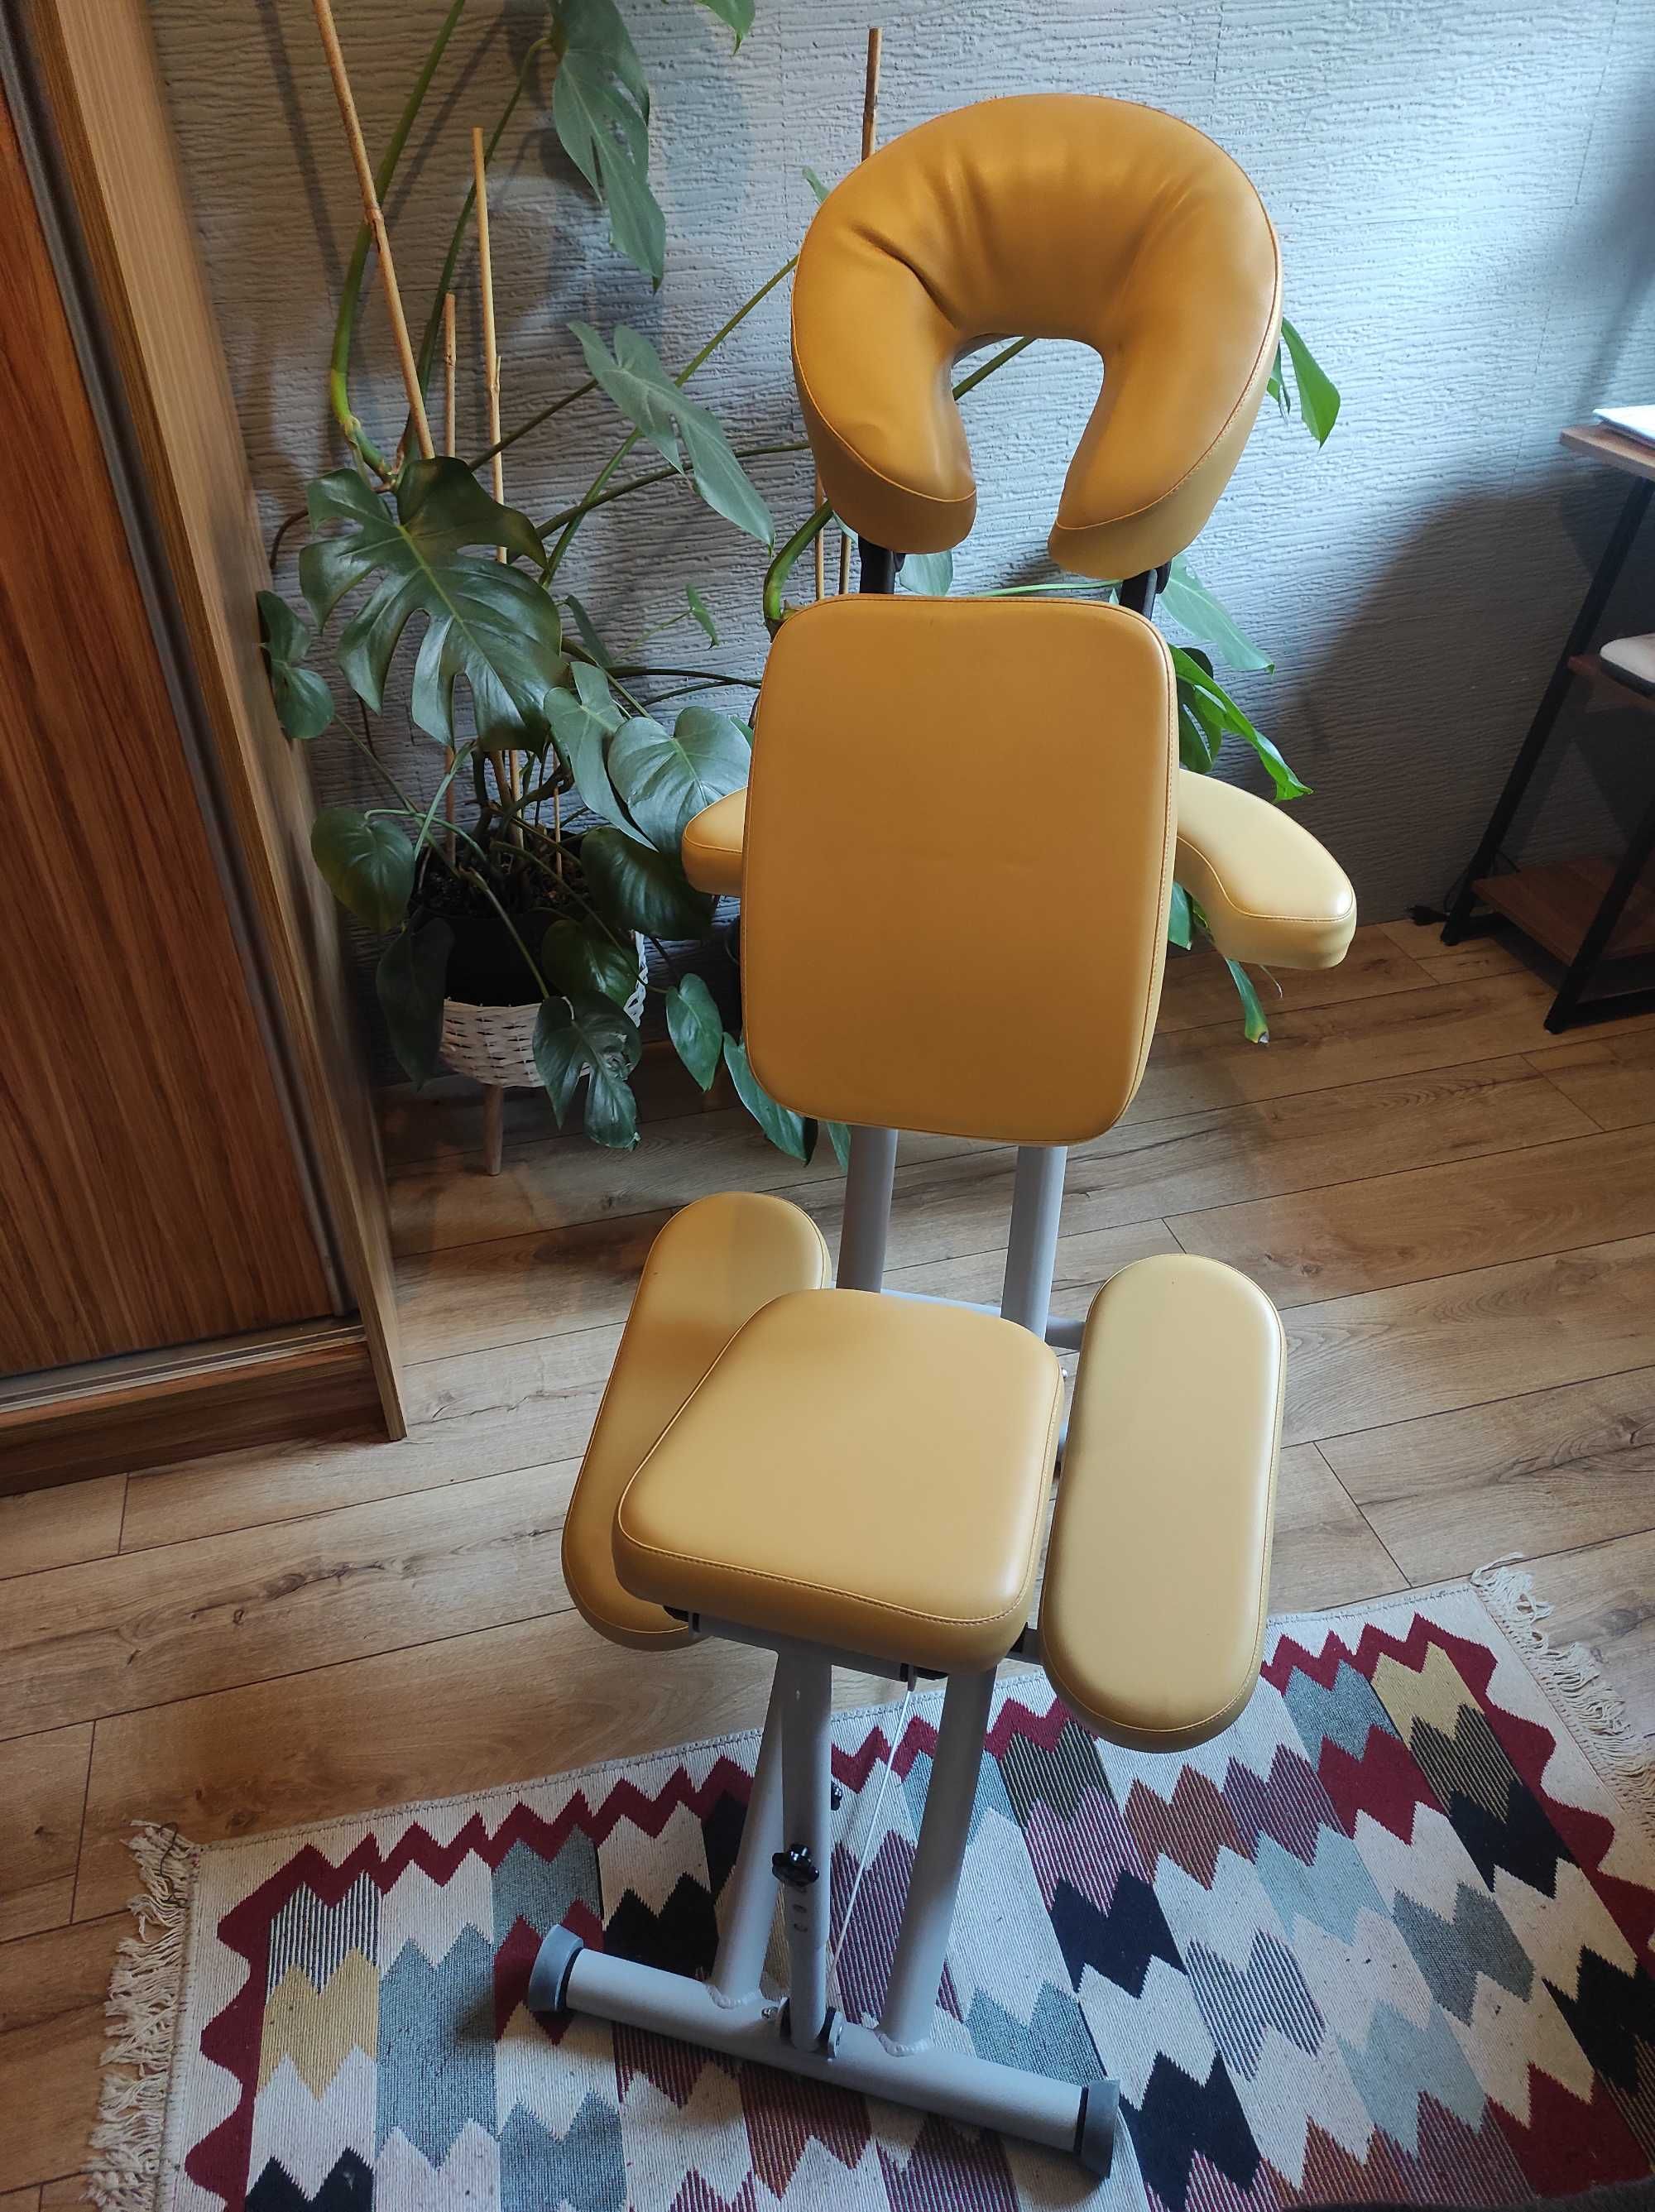 Krzesło do masażu OFFICE-REH ALUMINIUM
Renomowanej firmy Juventas